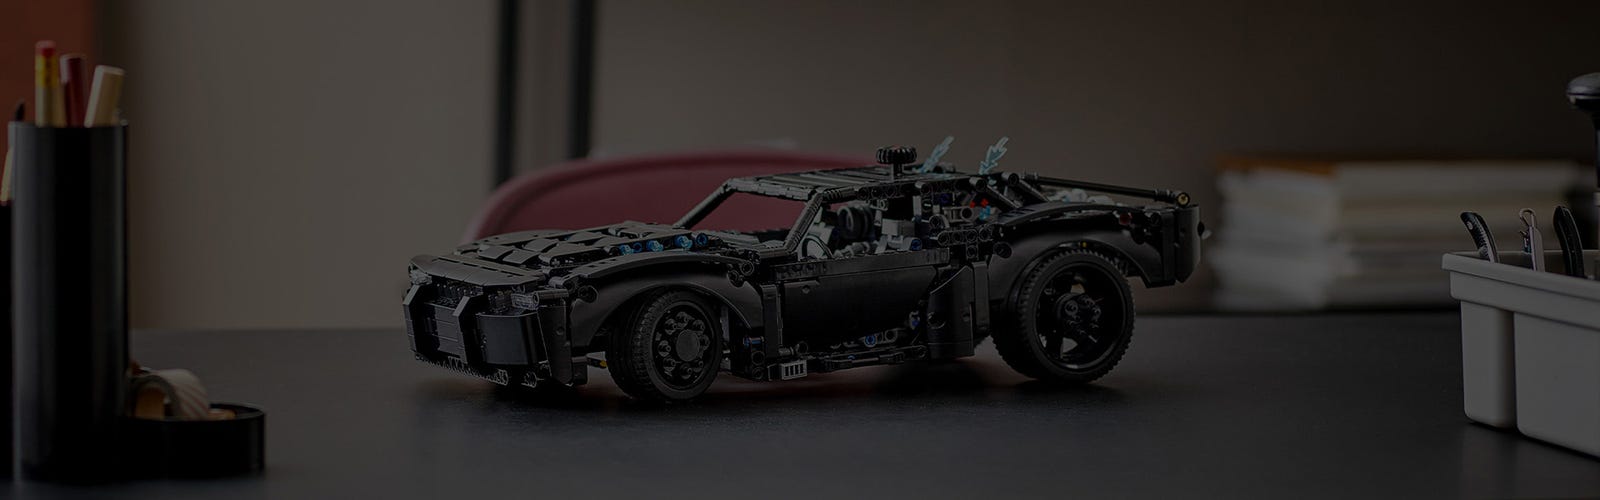 The Batman Batmobile 2022 Lego moc 